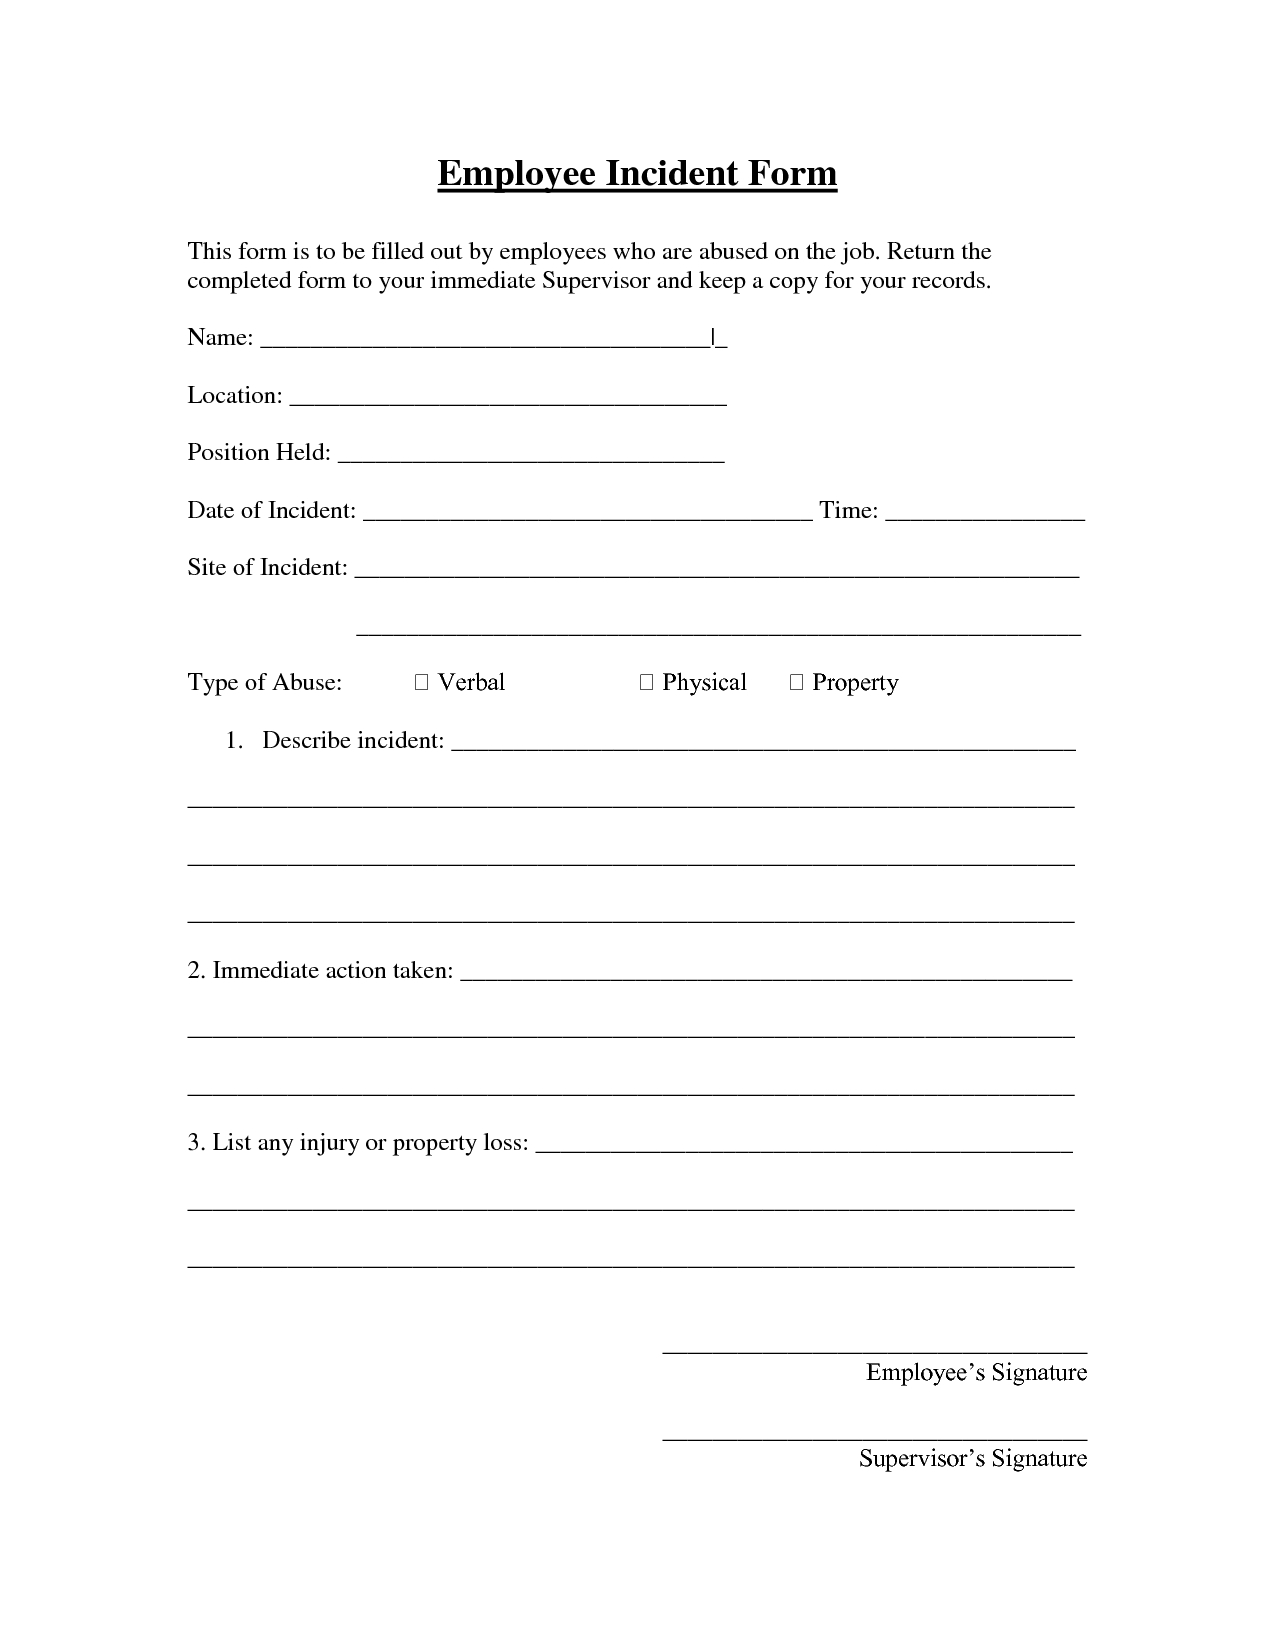 005 Employee Incident Report Form Template 290707 Top Ideas Regarding Incident Report Form Template Doc